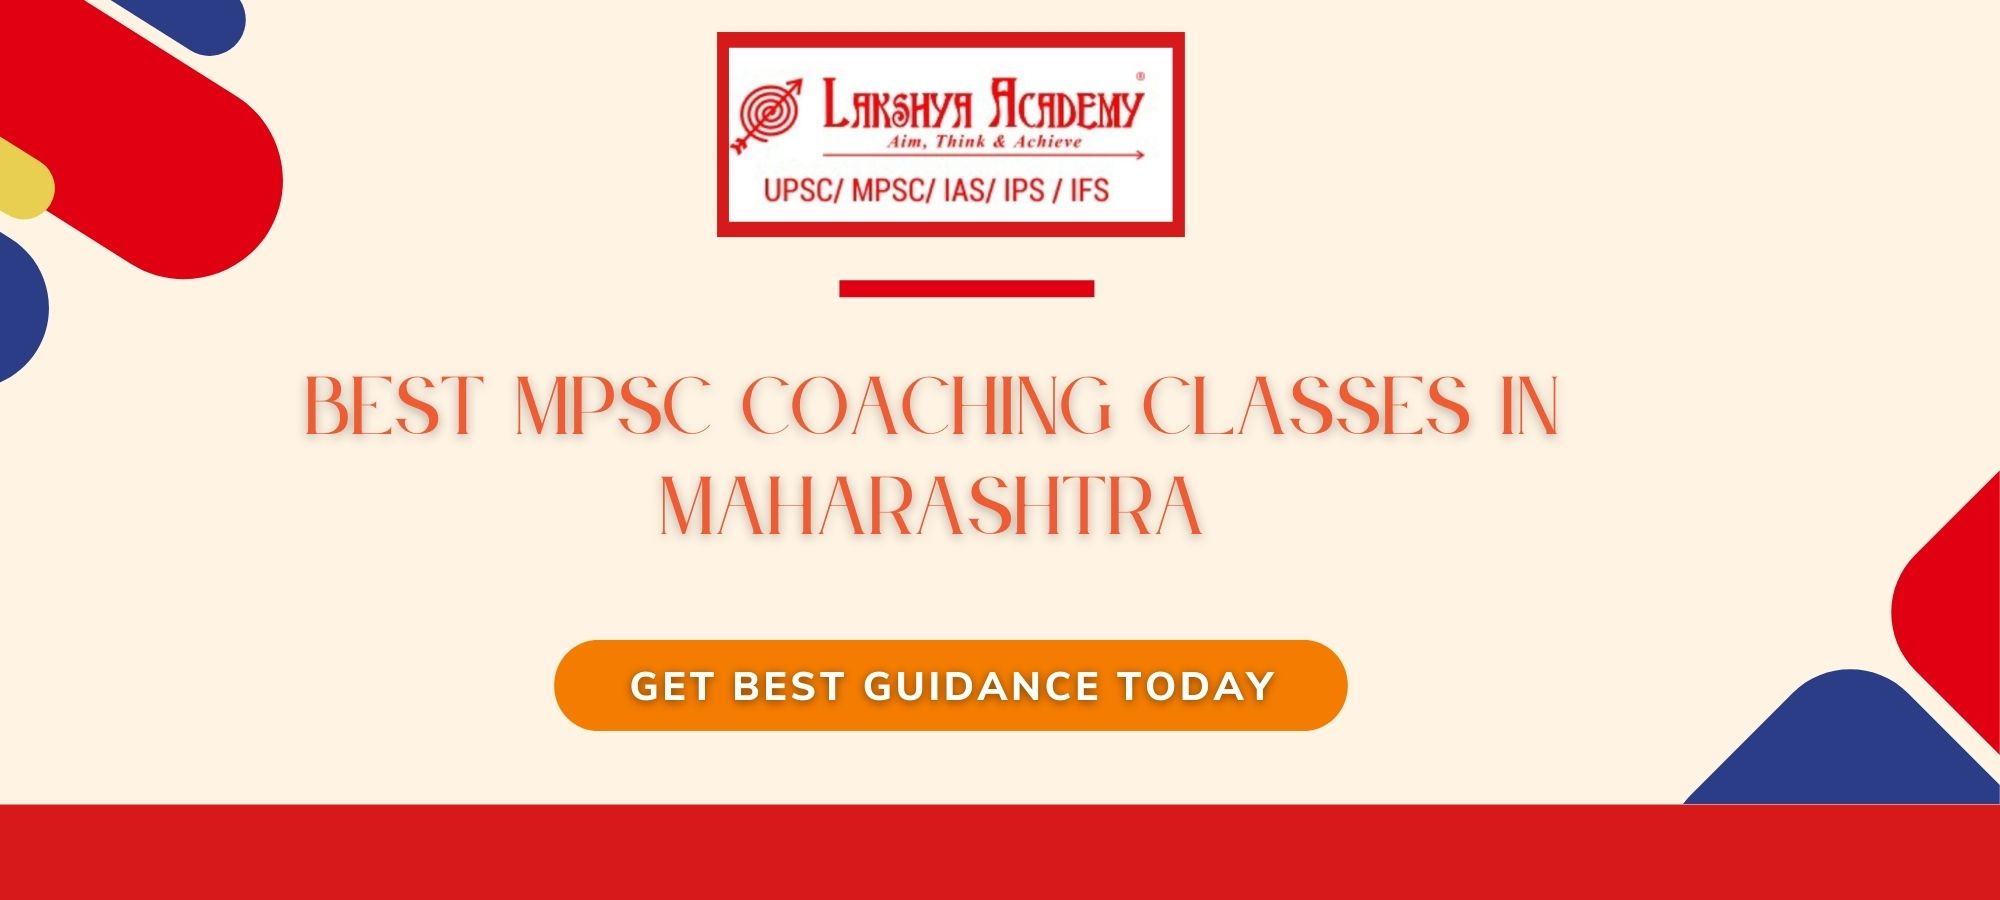 Best MPSC Coaching Classes In Maharashtra | Best UPSC, IAS, MPSC Coaching Classes In Mumbai